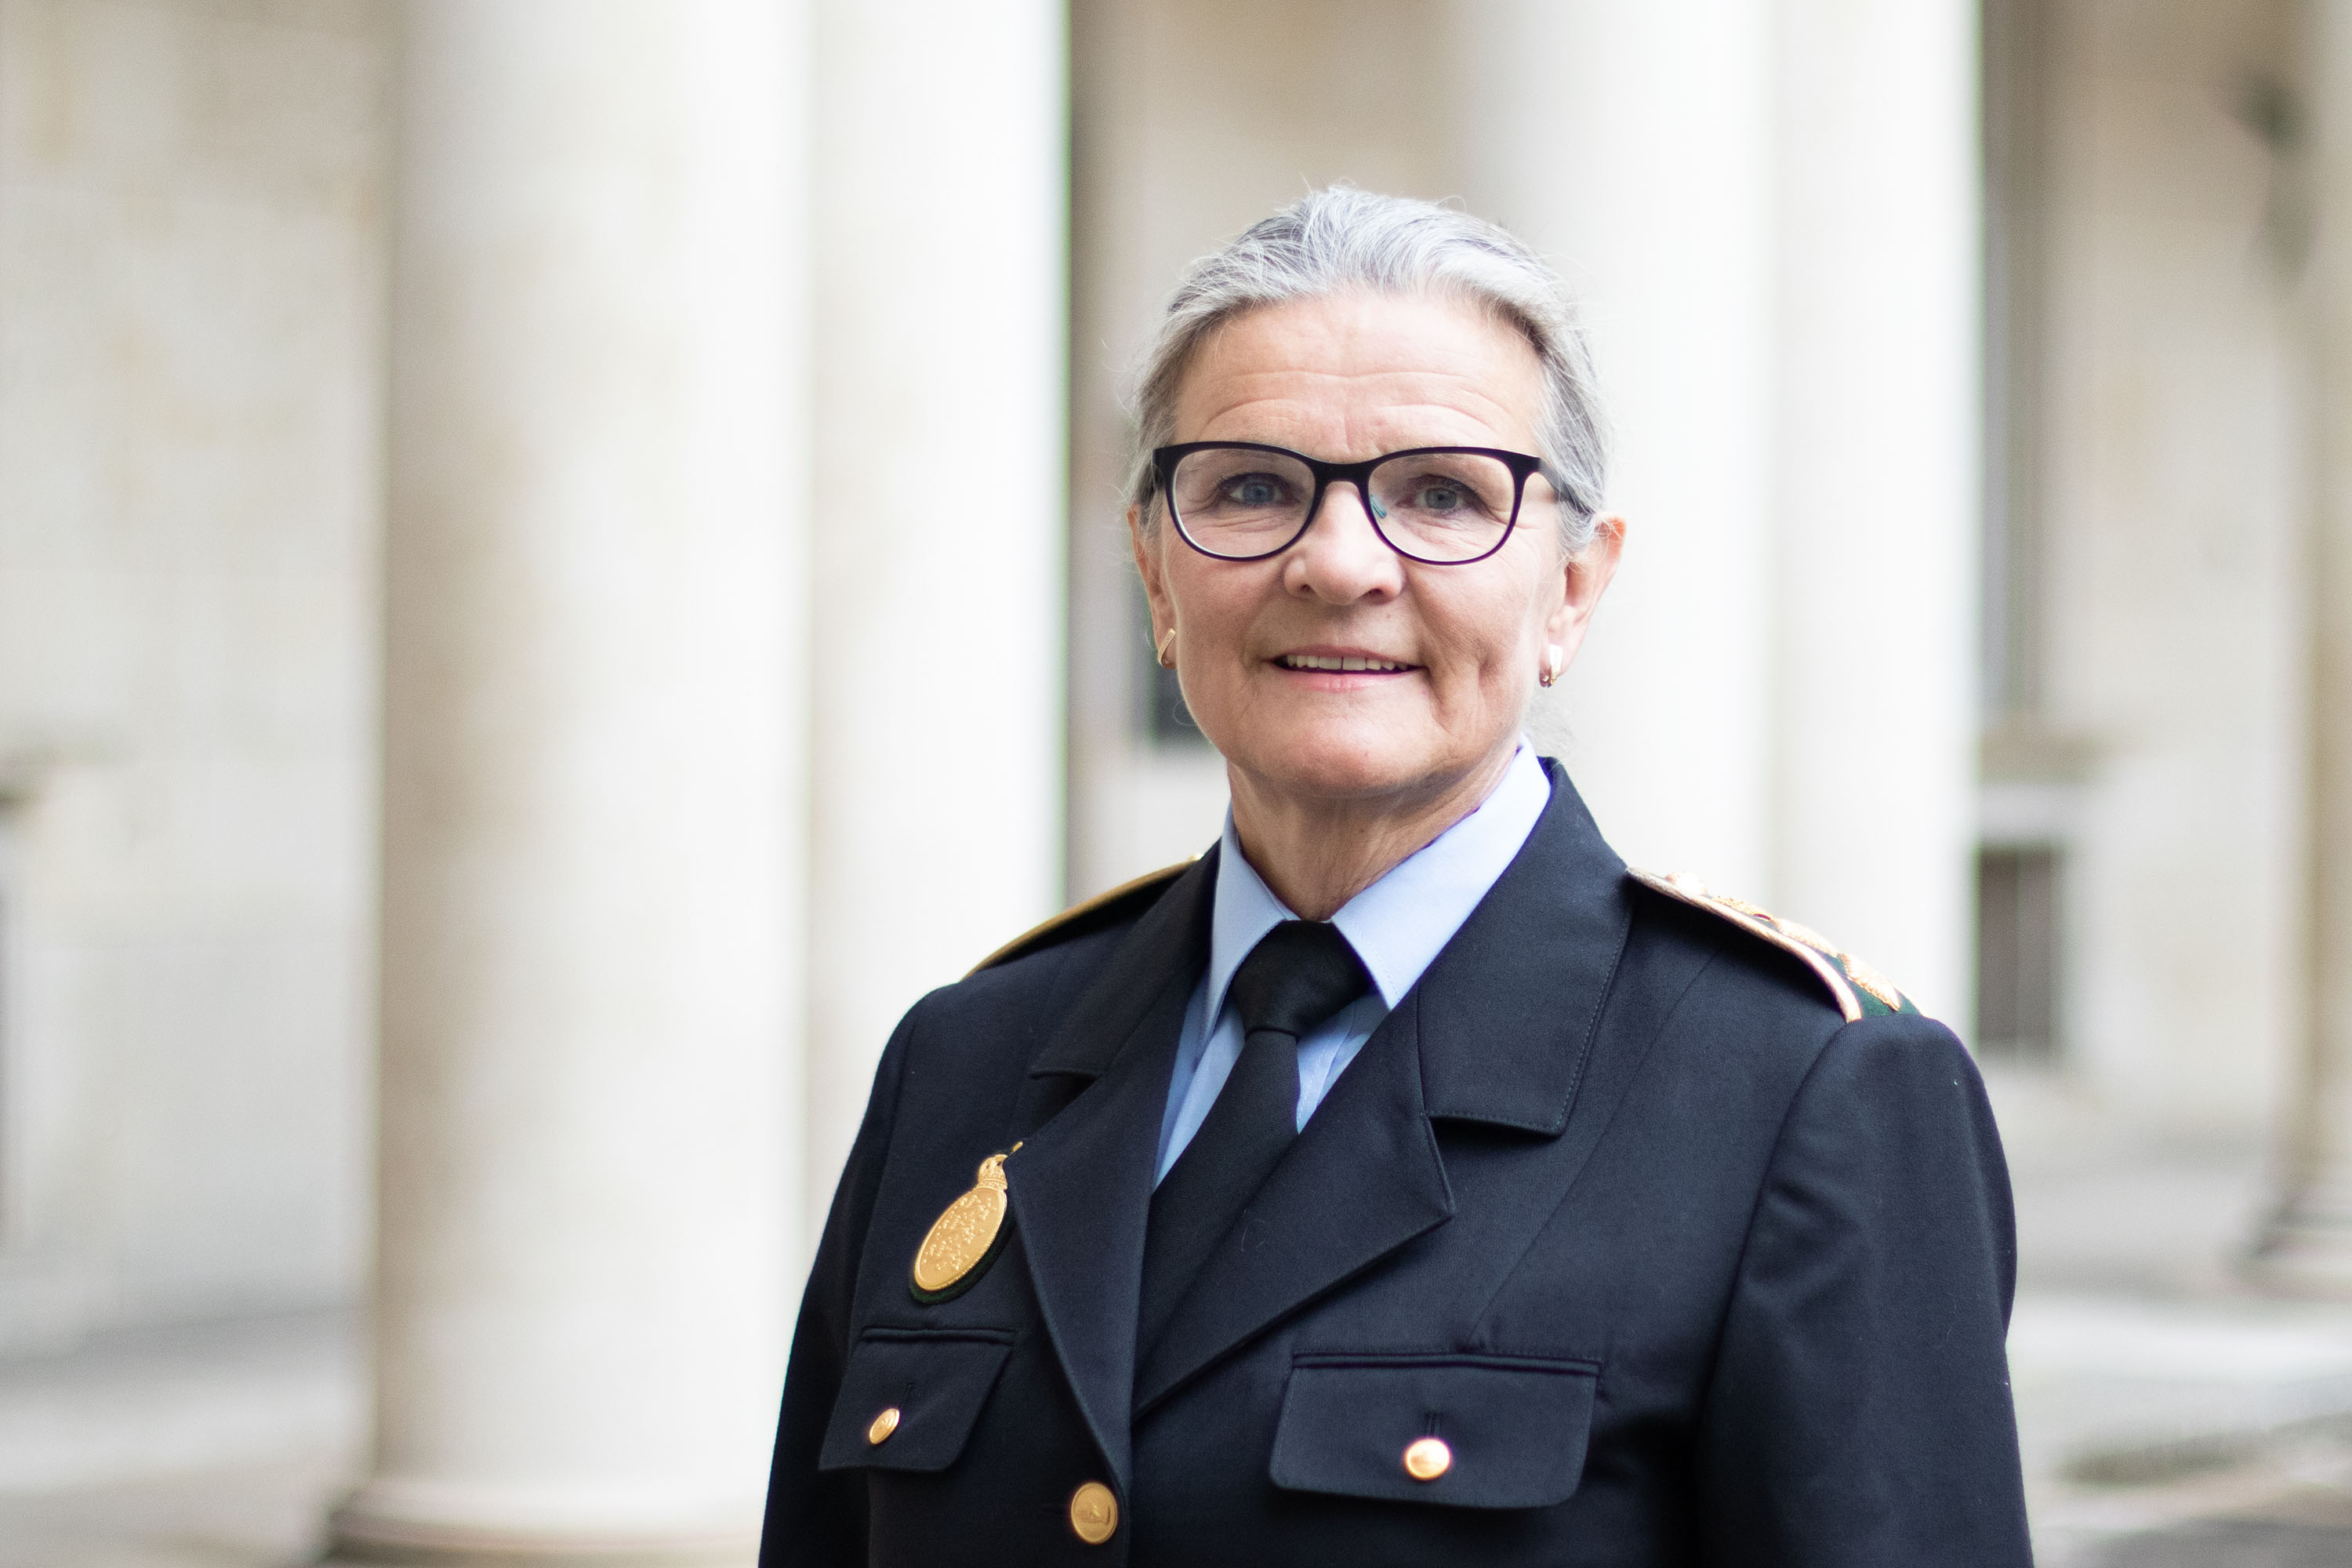 Politidirektør Kirsten Dyrman, Østjyllands Politi